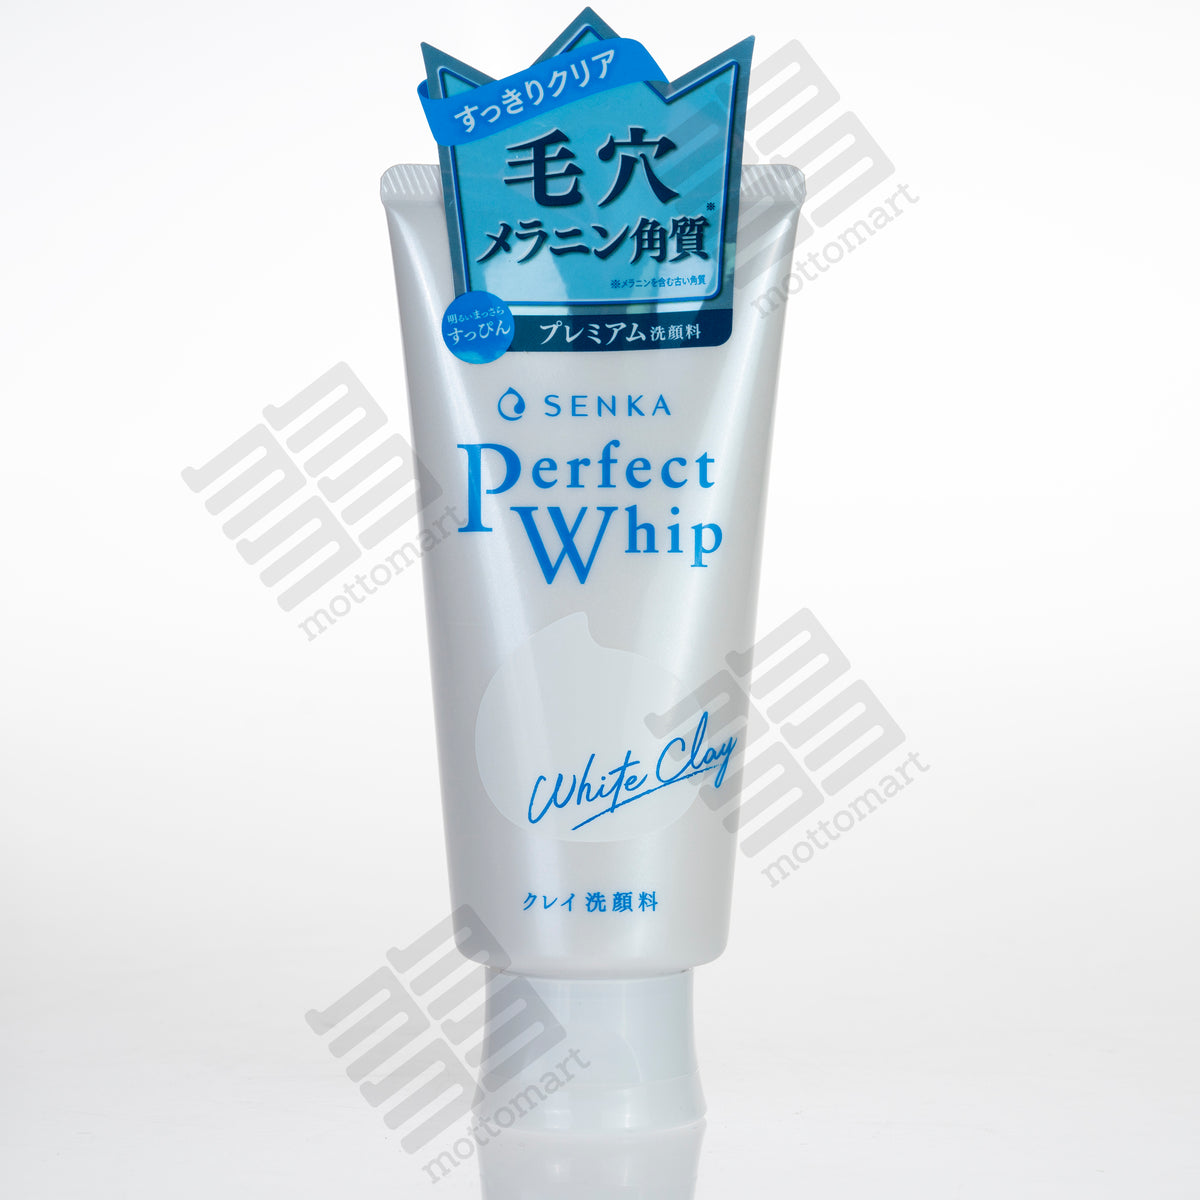 Shiseido Senka Perfect Whip White Clay Pore Cleanser 120g